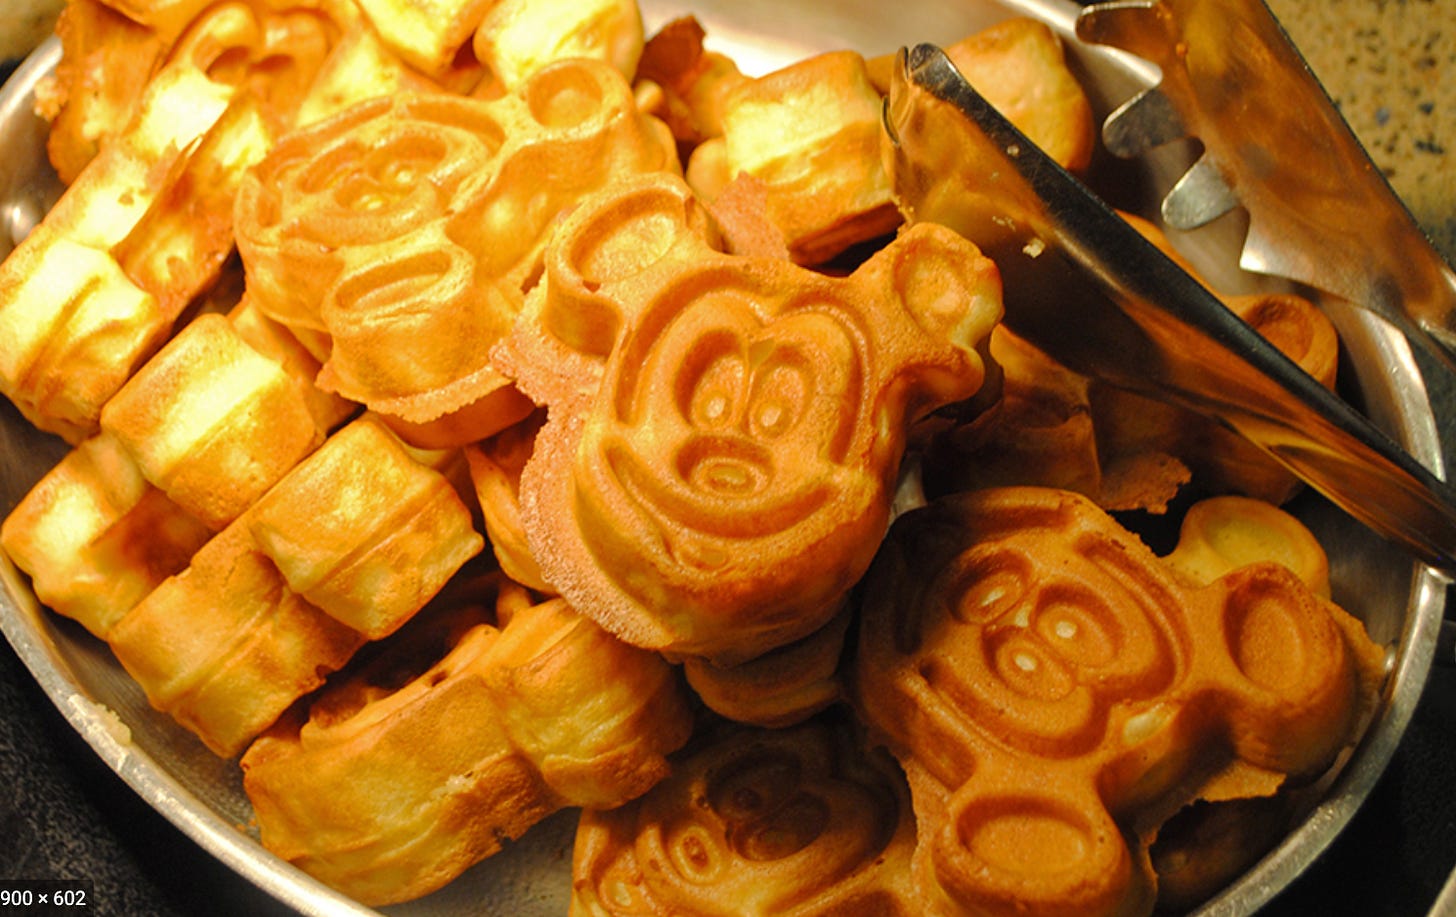 10 Best Spots for Waffles at Walt Disney World - MickeyBlog.com